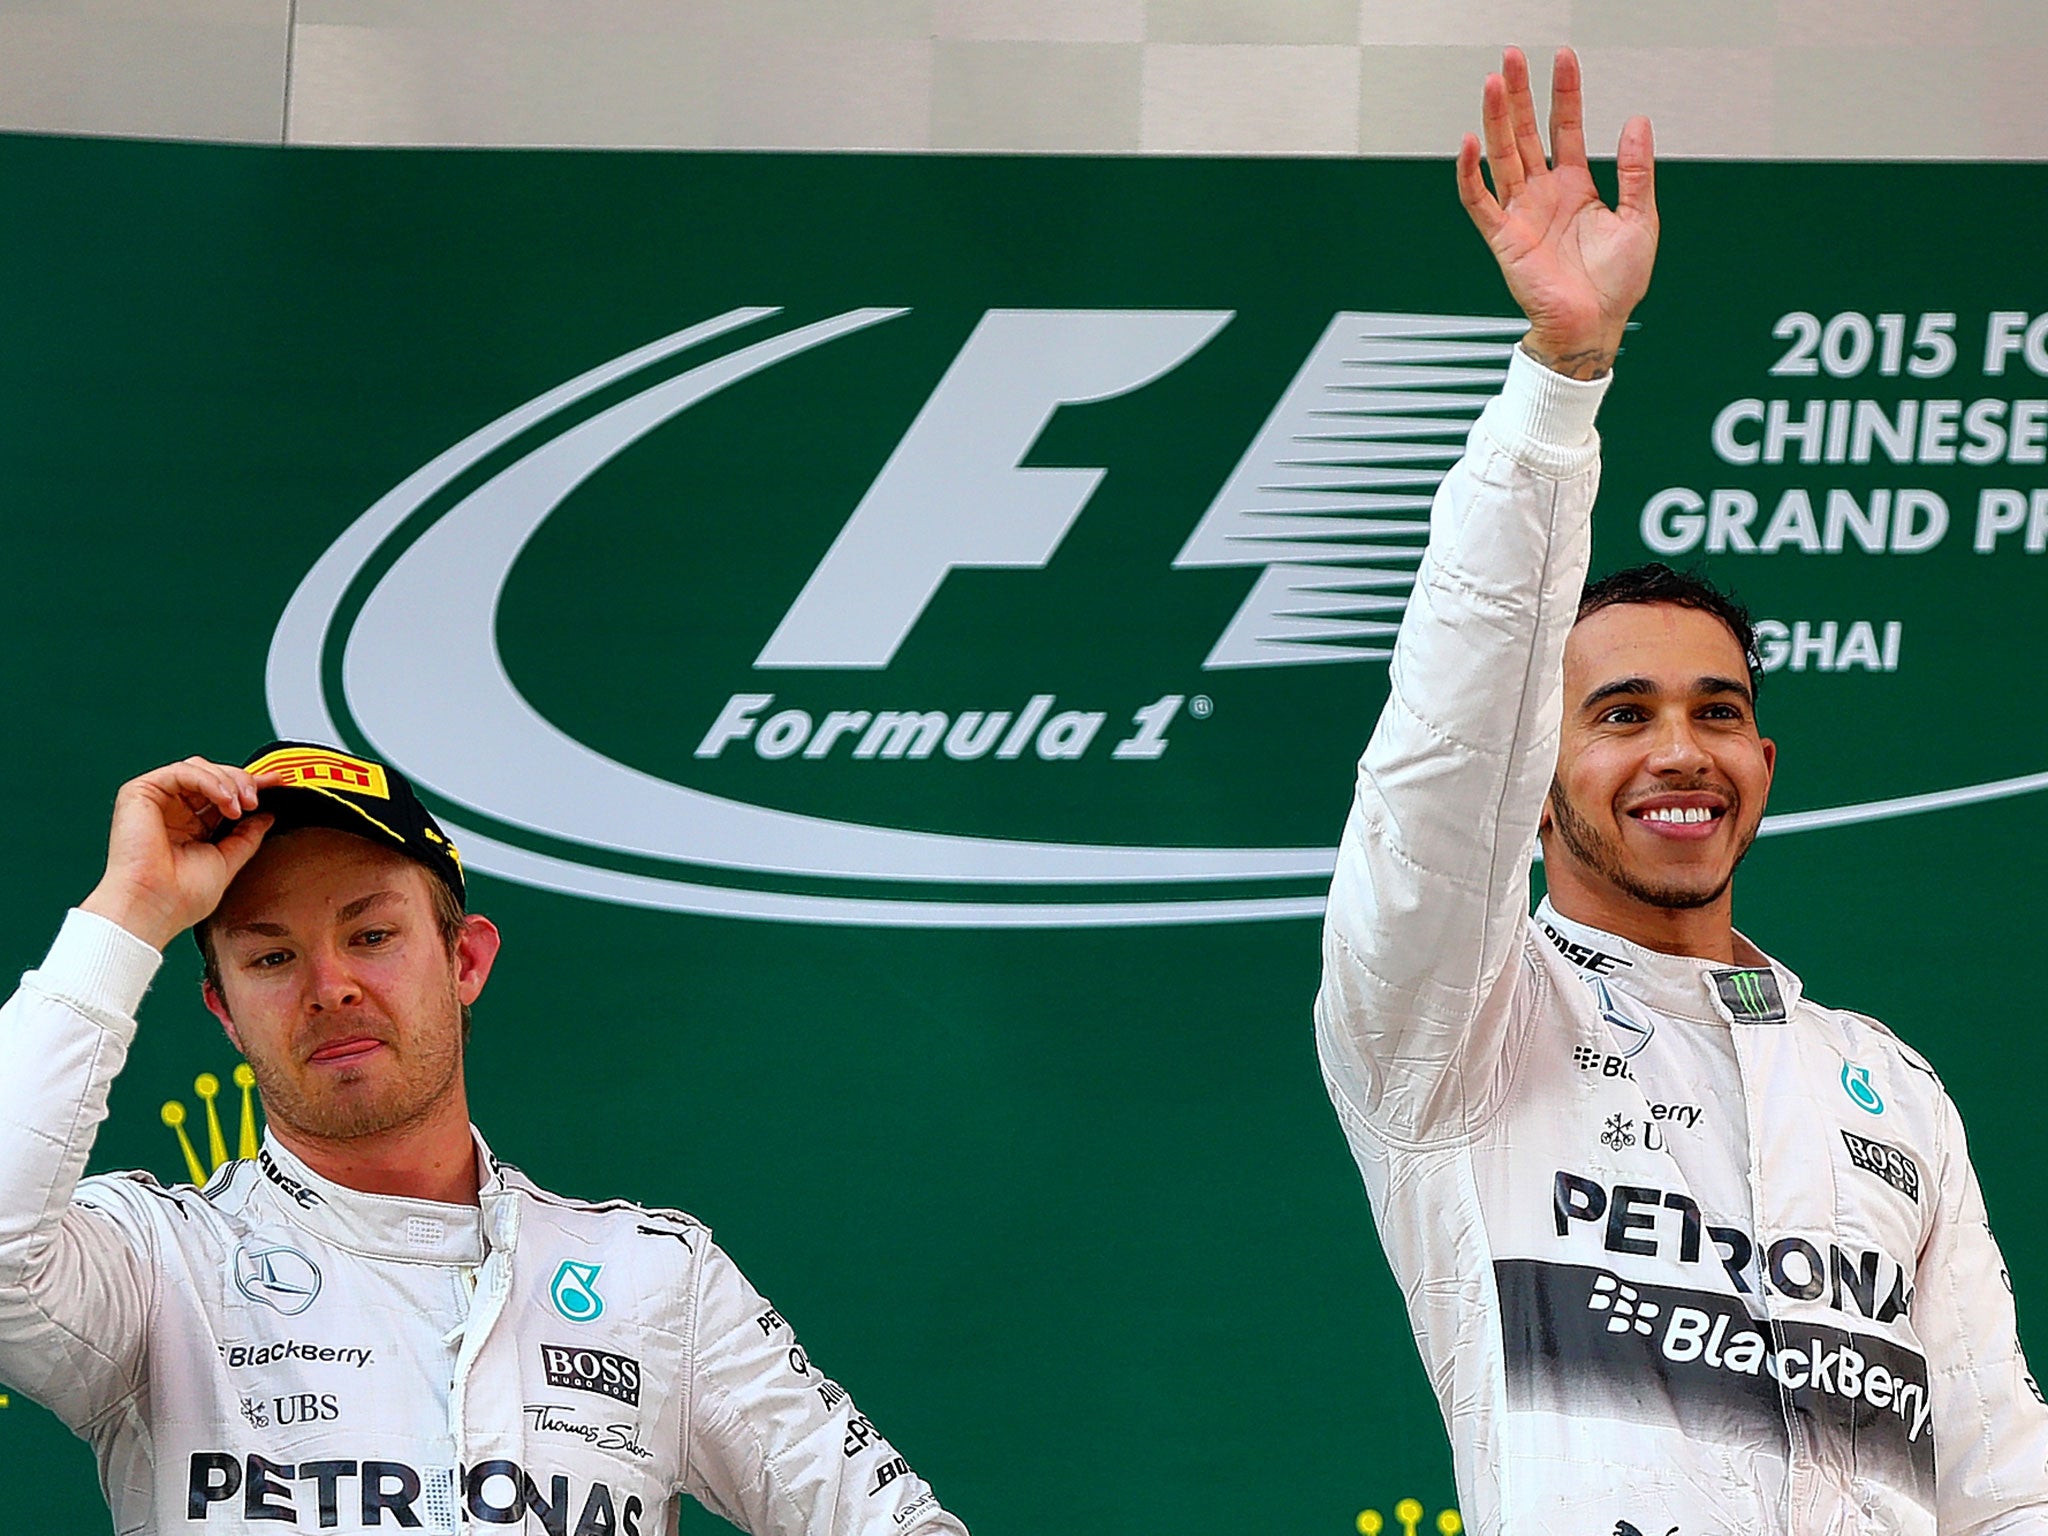 Nico Rosberg (left) looks none too impressed as his team-mate Lewis Hamilton celebrates victory in Shanghai